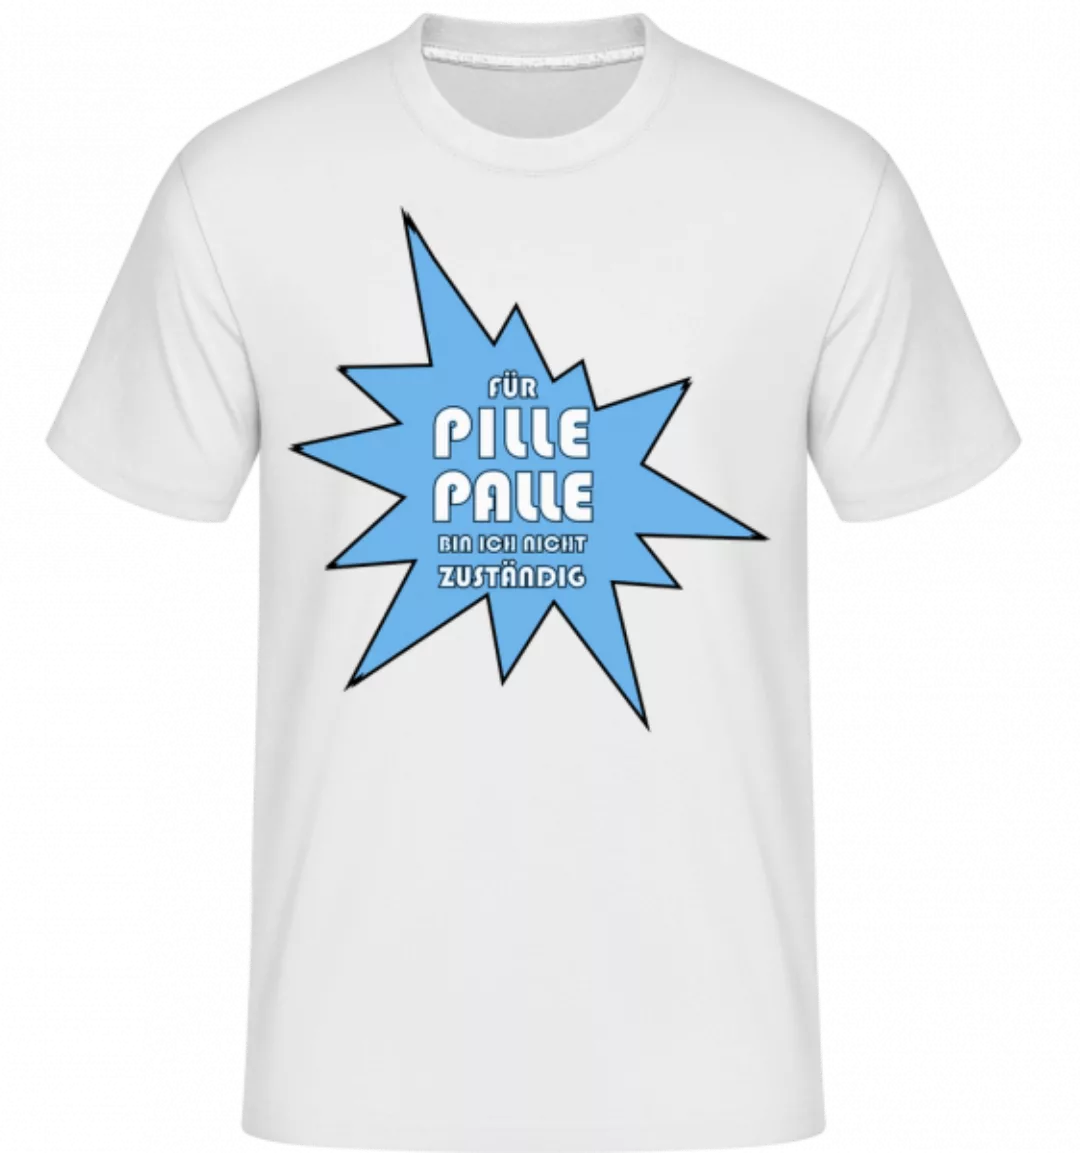 Pille Palle · Shirtinator Männer T-Shirt günstig online kaufen